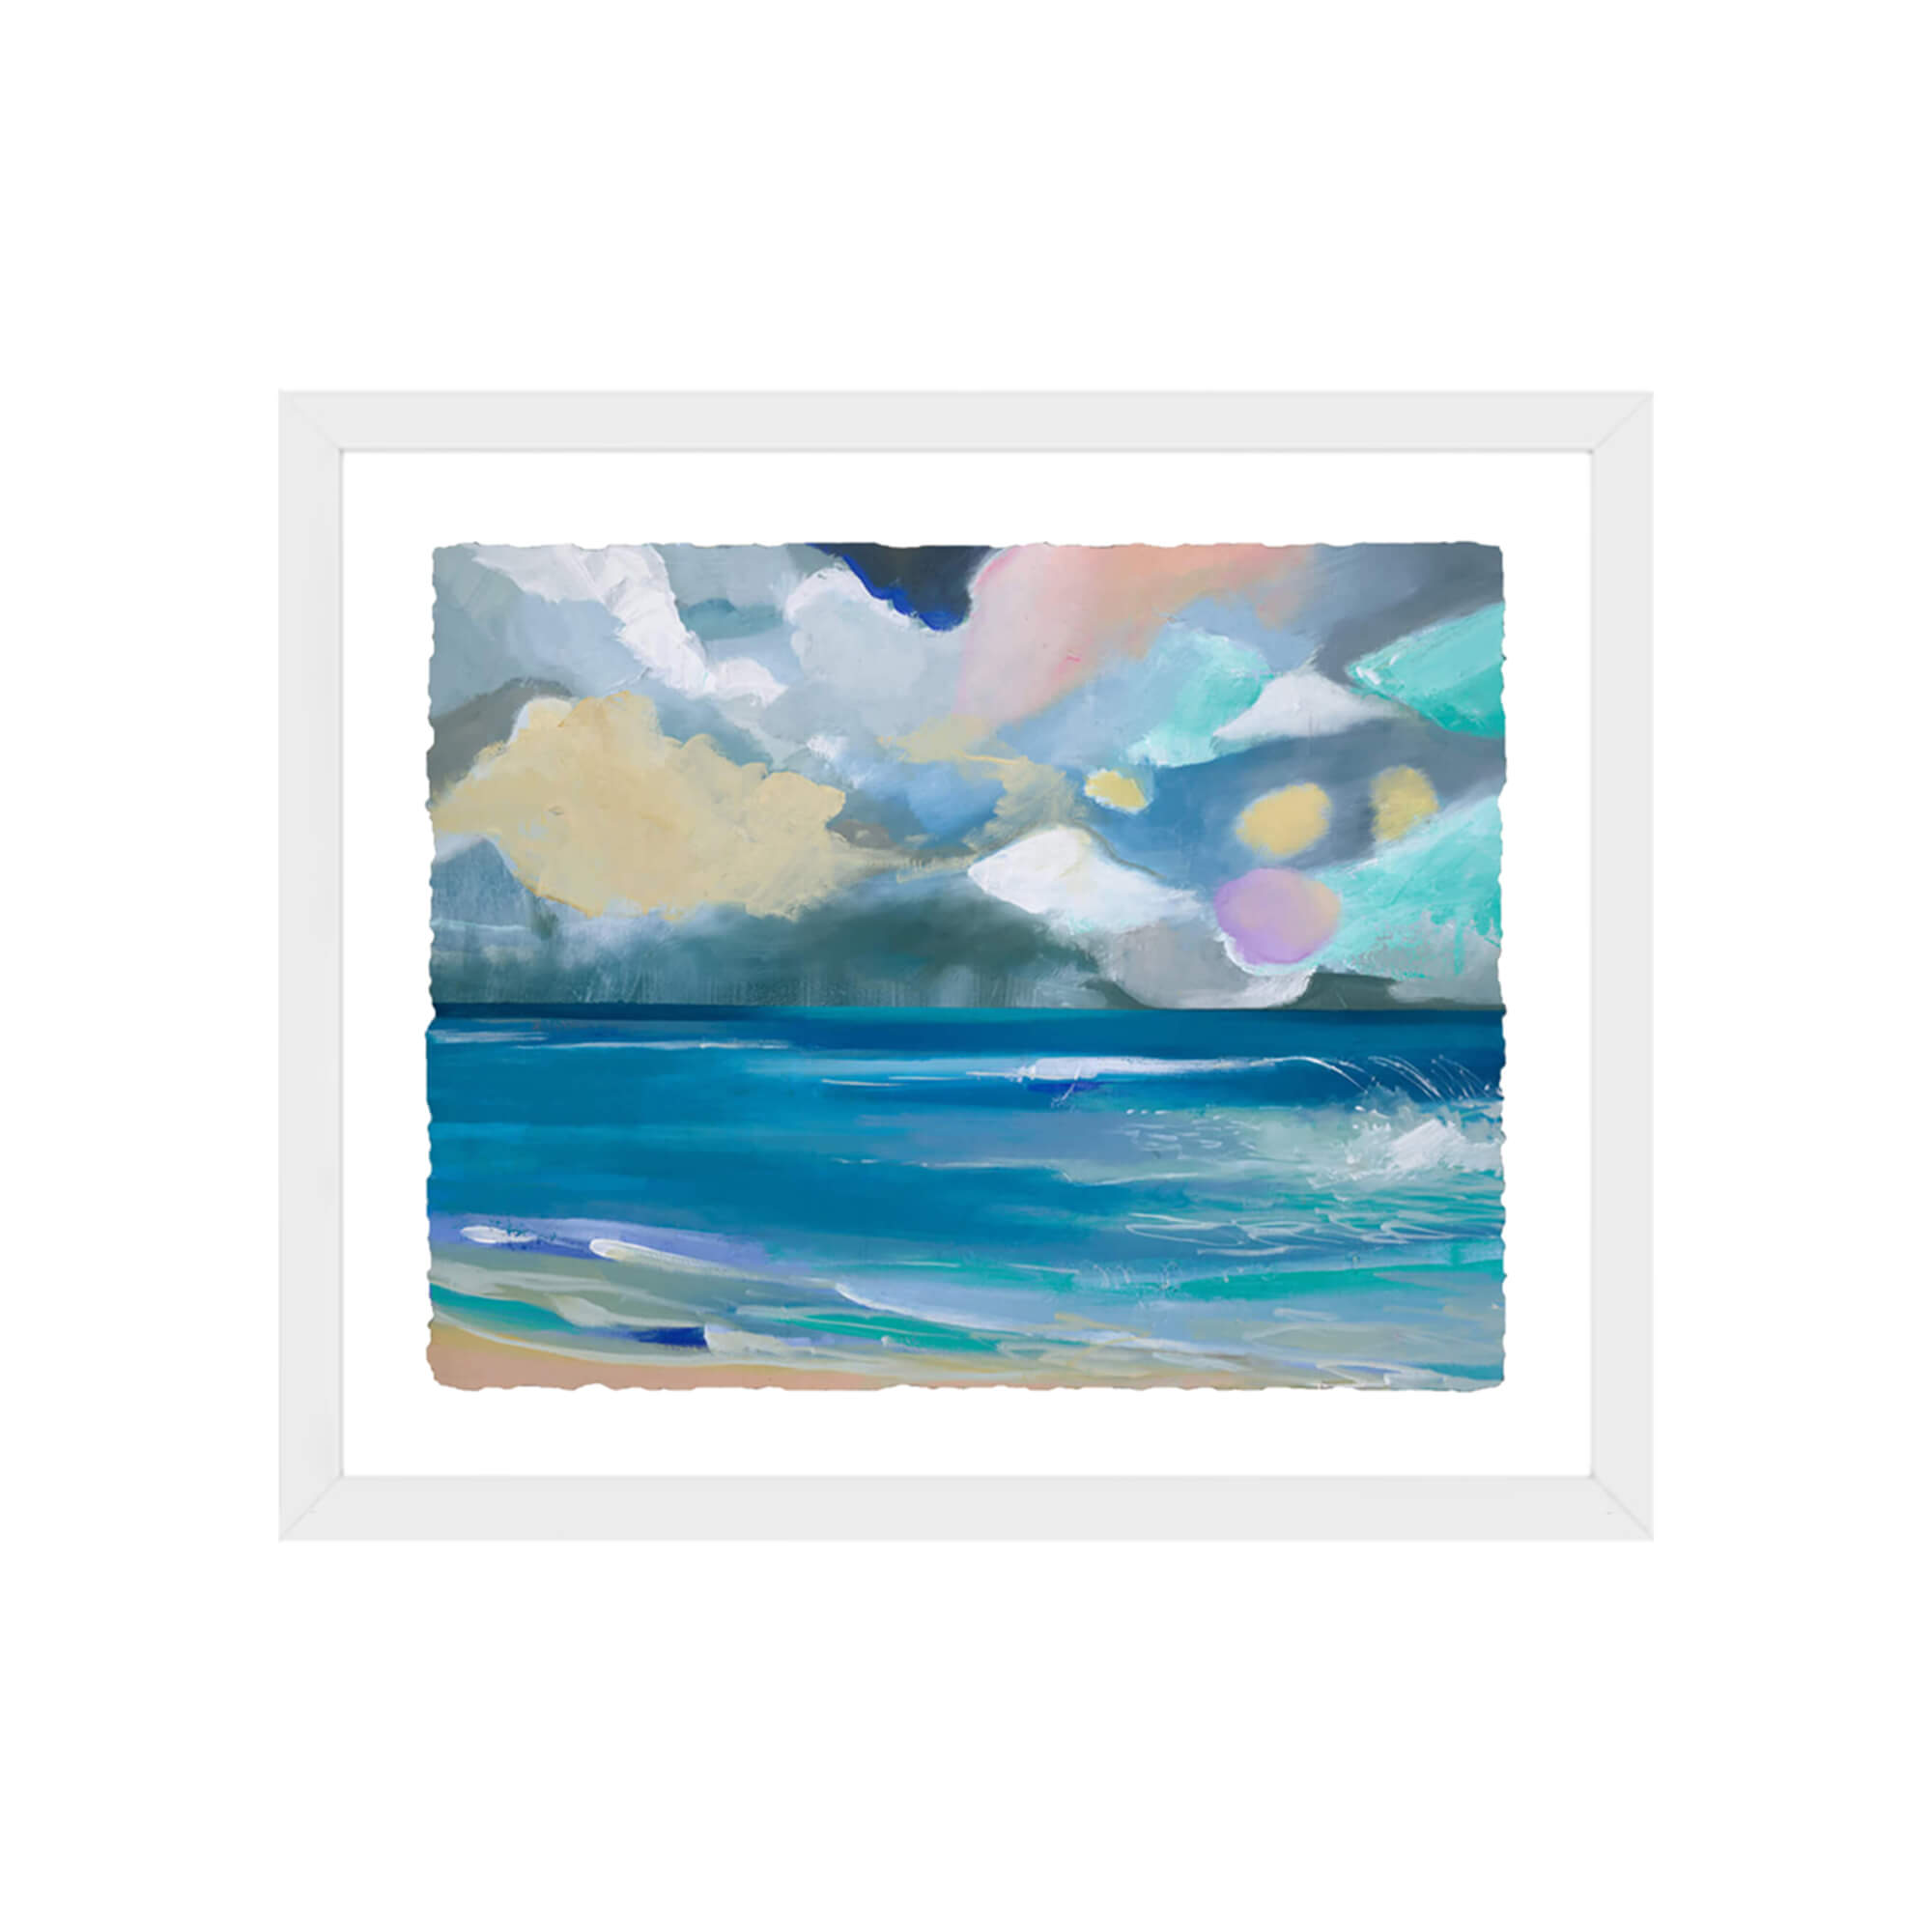 Framed paper art print of a serene seascape by Hawaii artist Saumolia Puapuaga